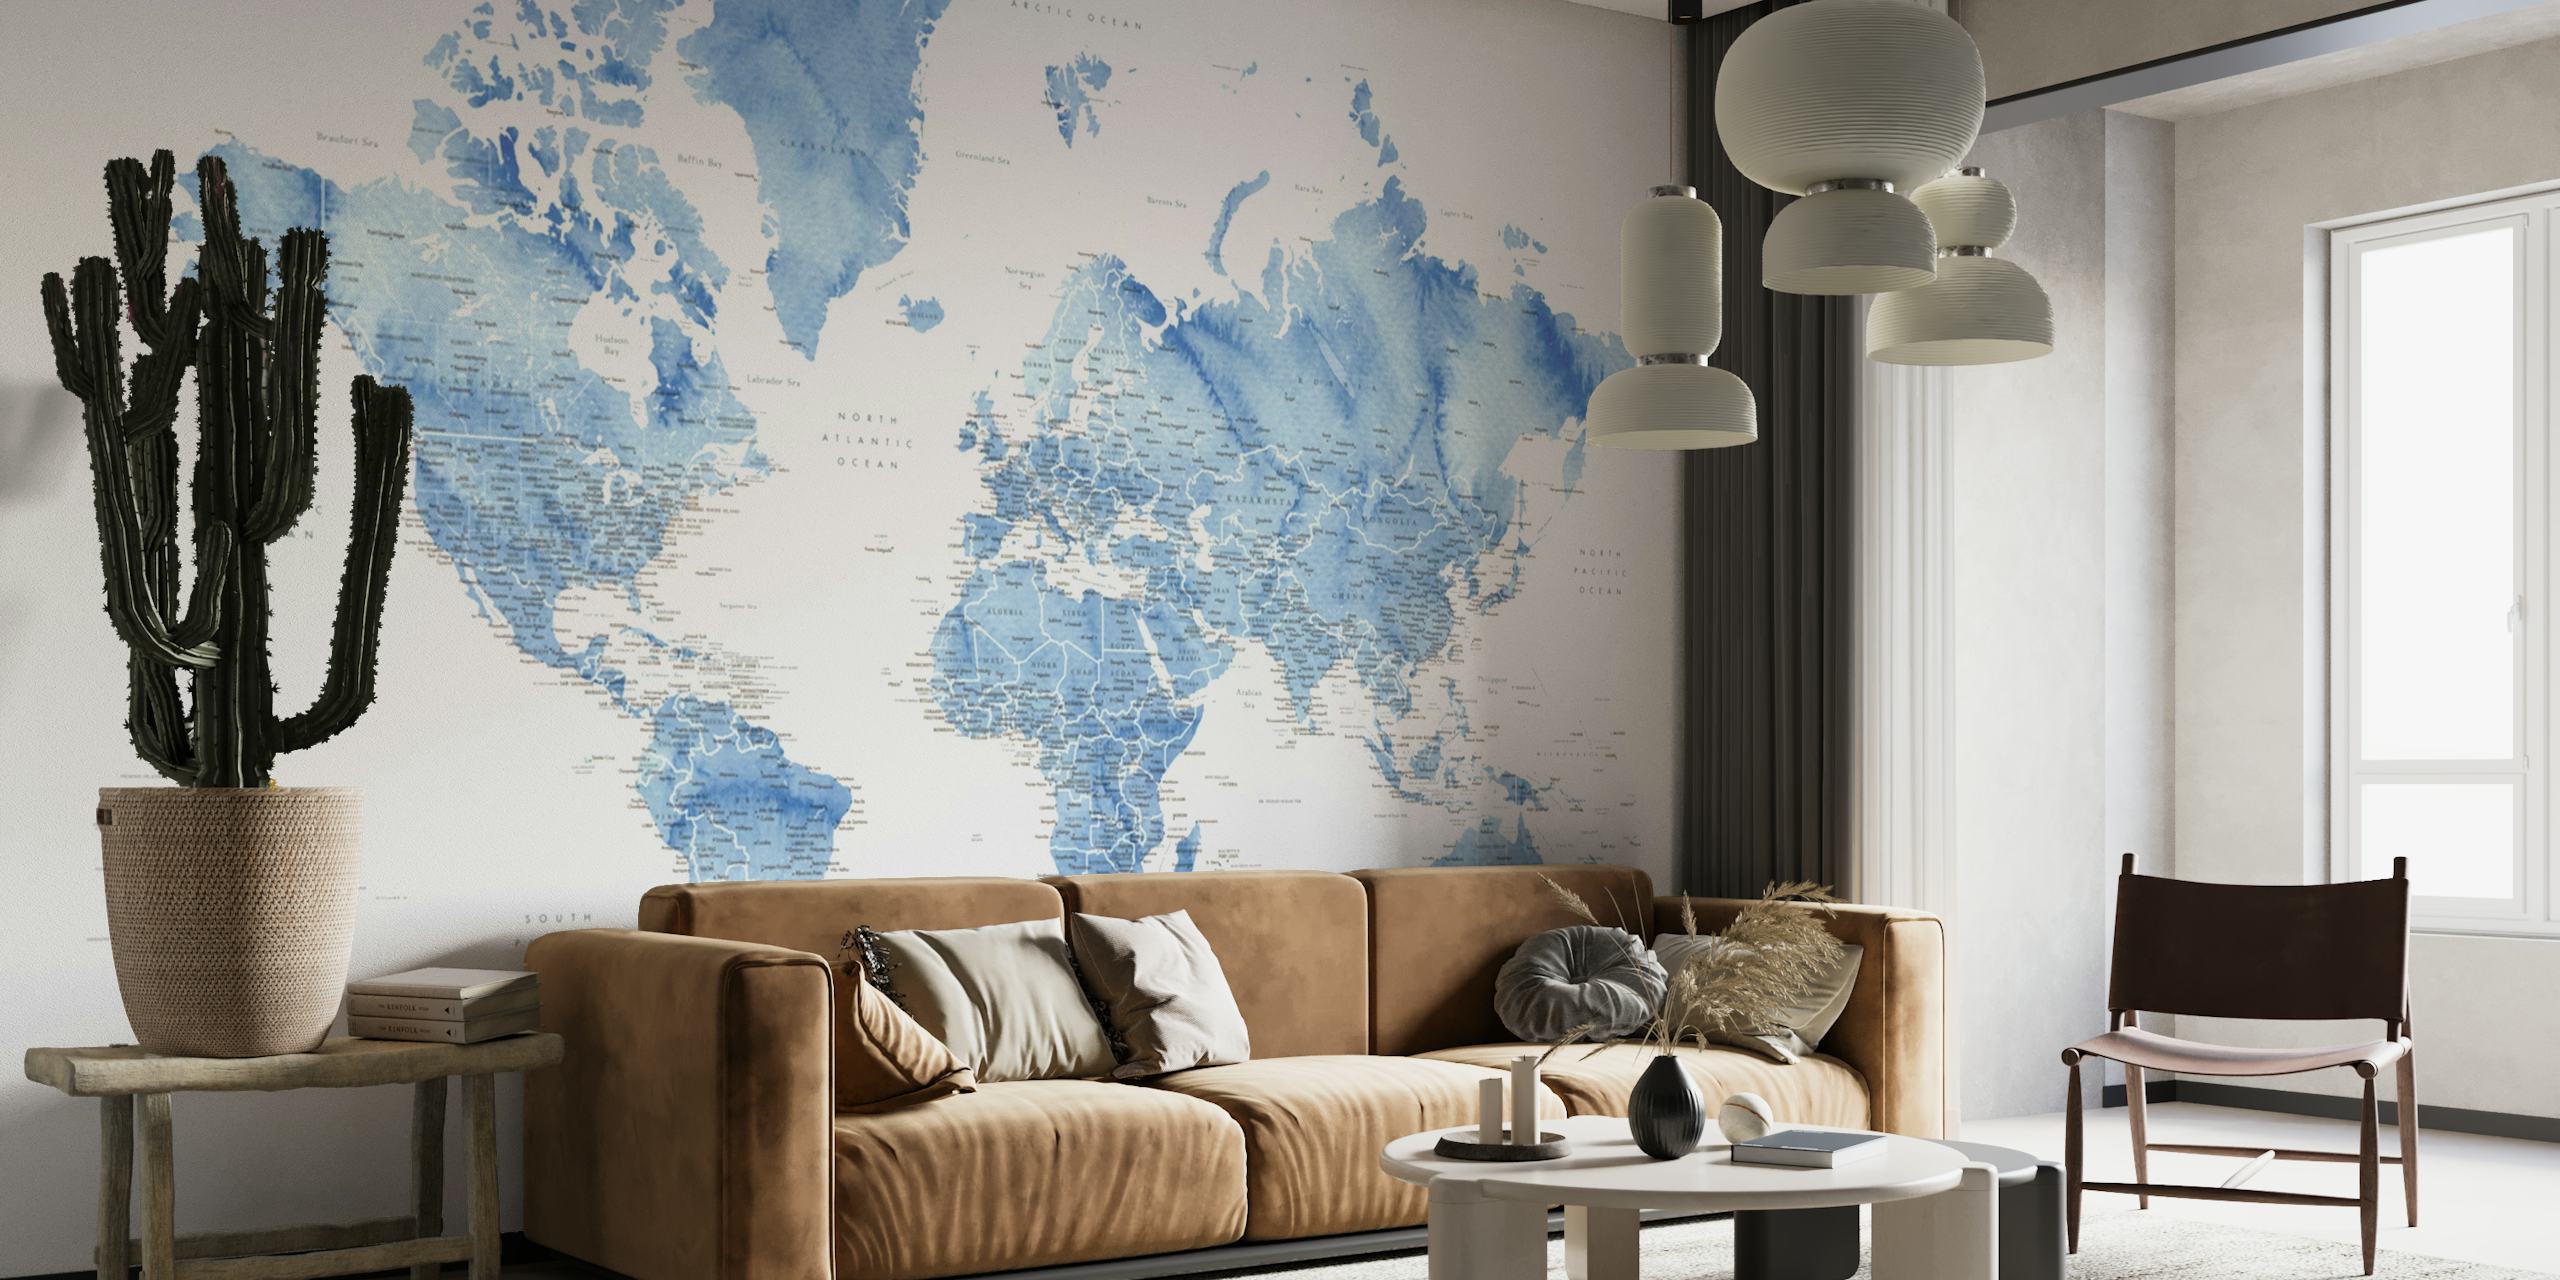 Detailed world map Vance papel pintado